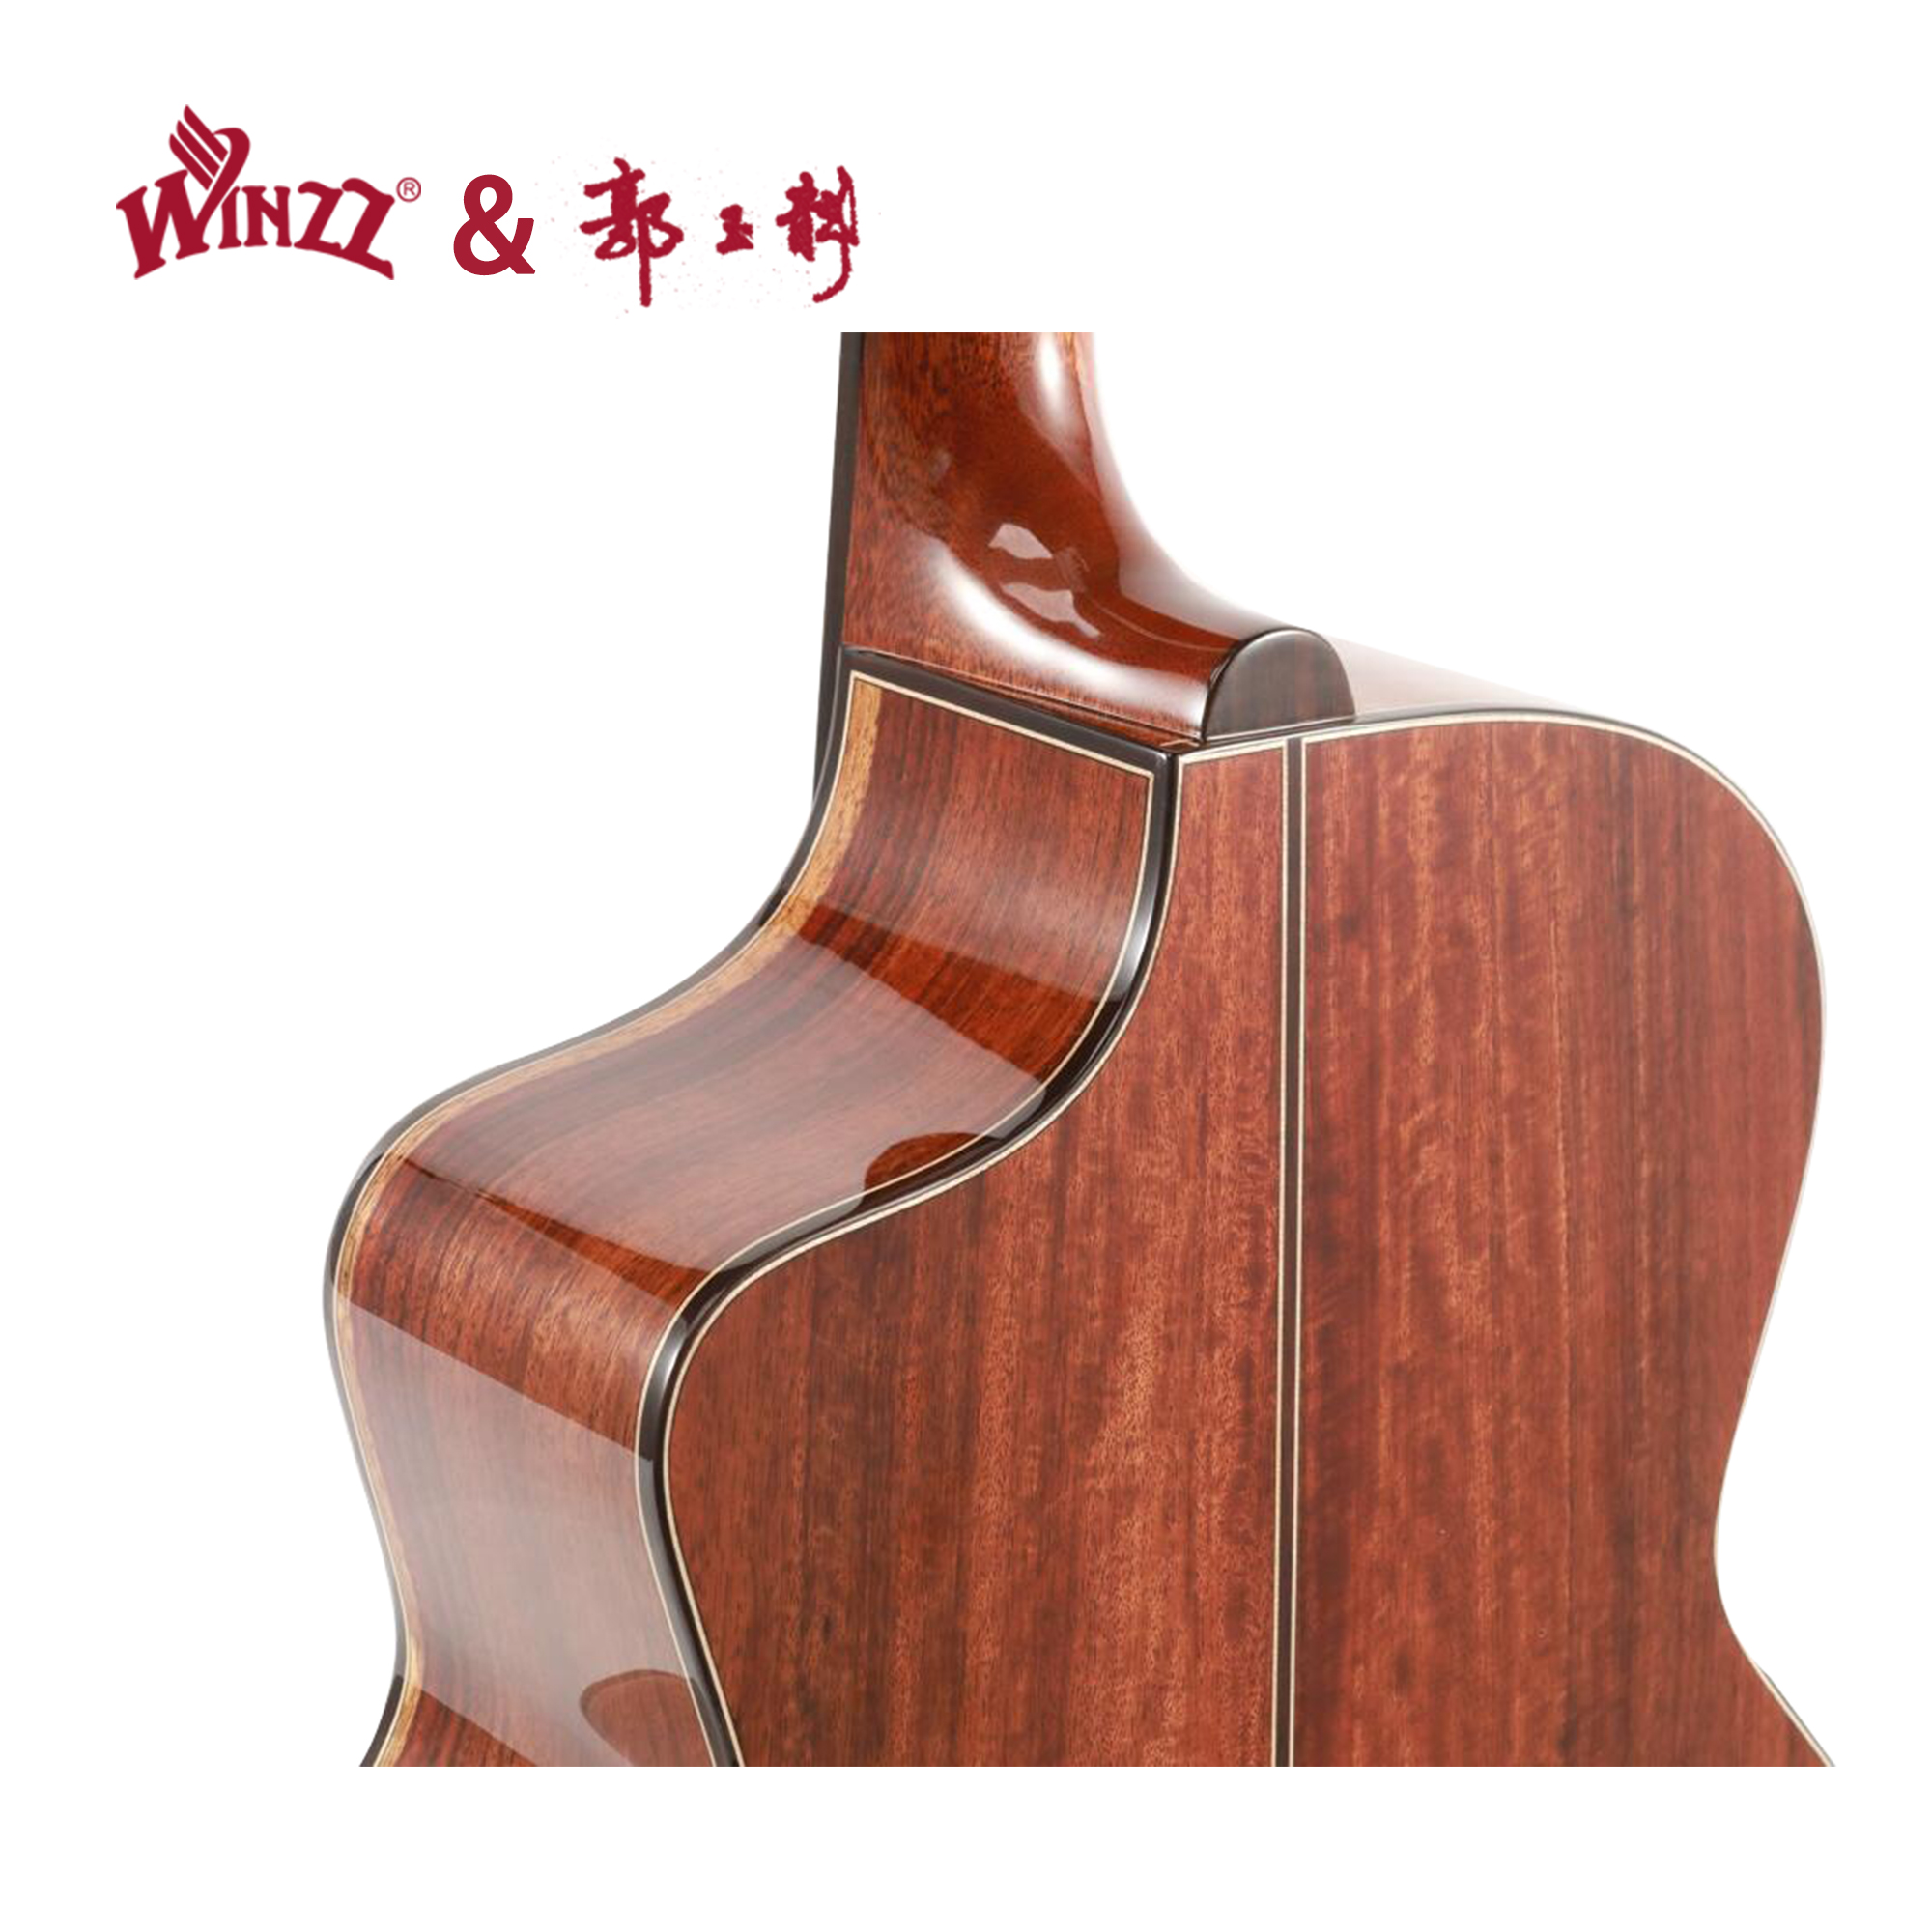 Solid Sitka Acoustic Guitar Yulong Guo Cutaway Shape with Guitar Case(WGA2022SC)